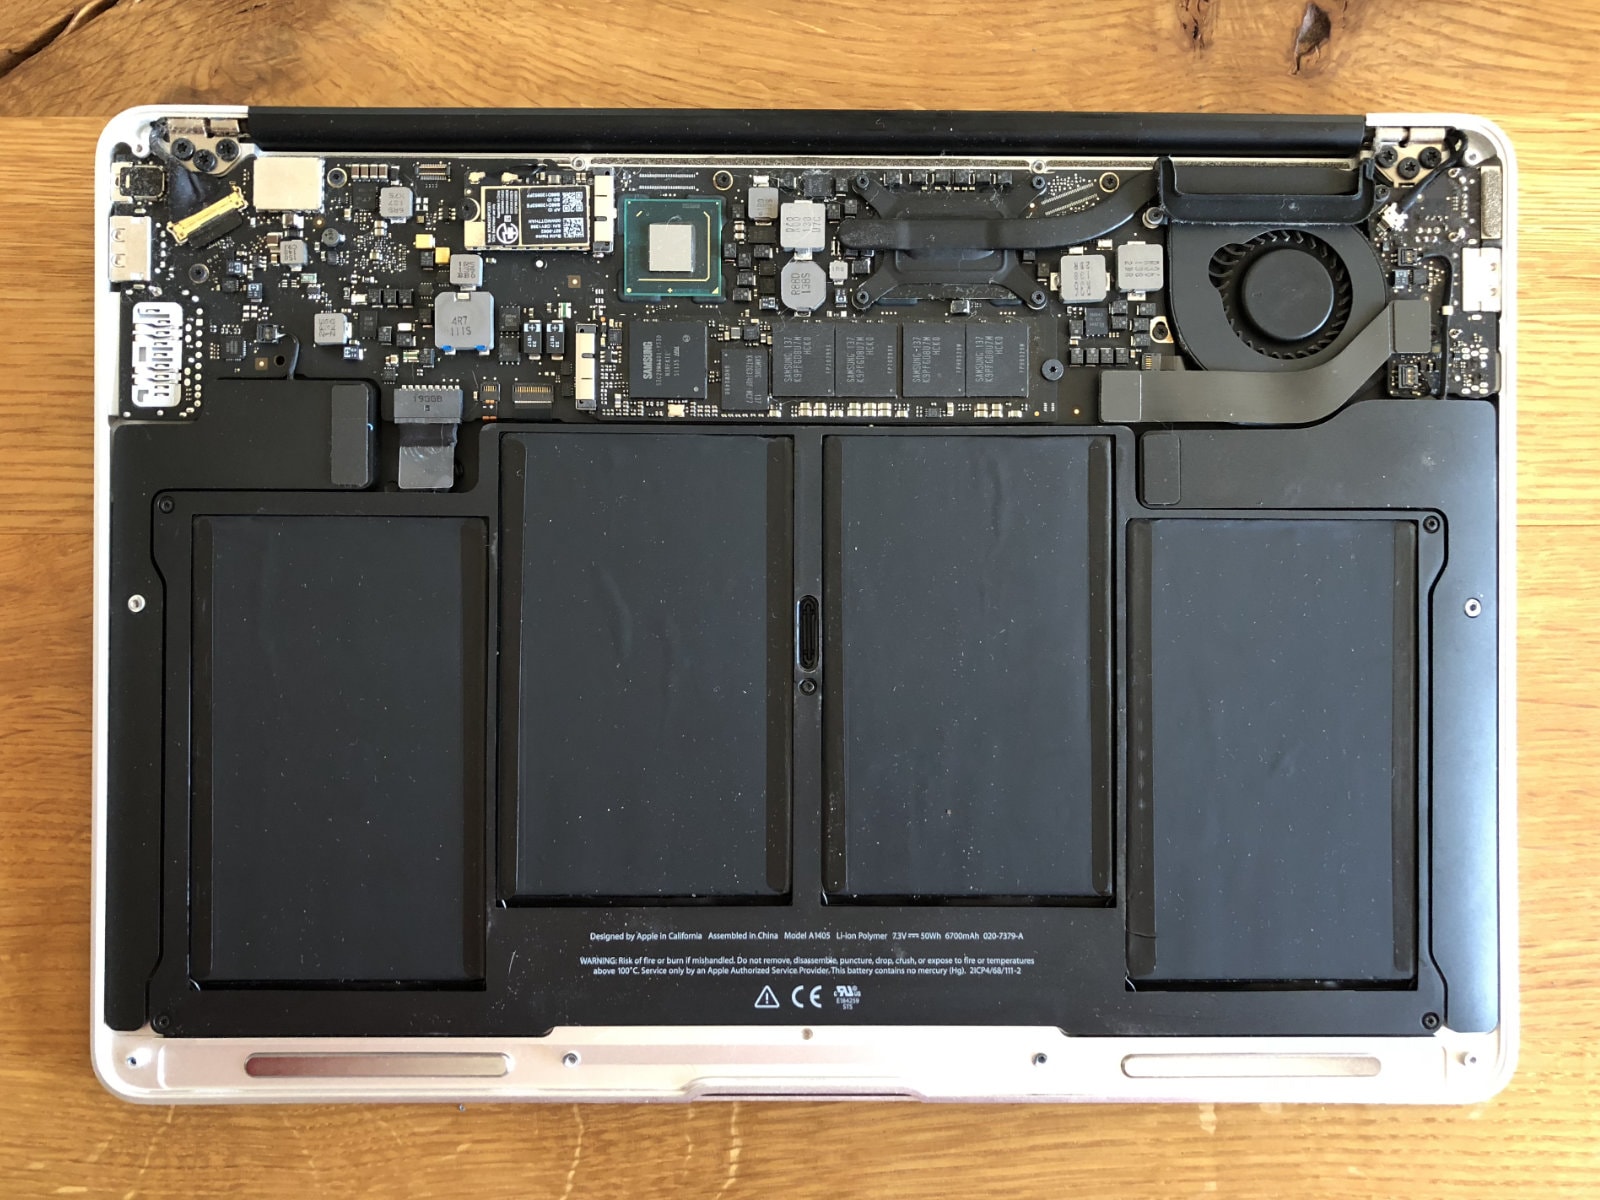 MacBook Airの底蓋を外した状態